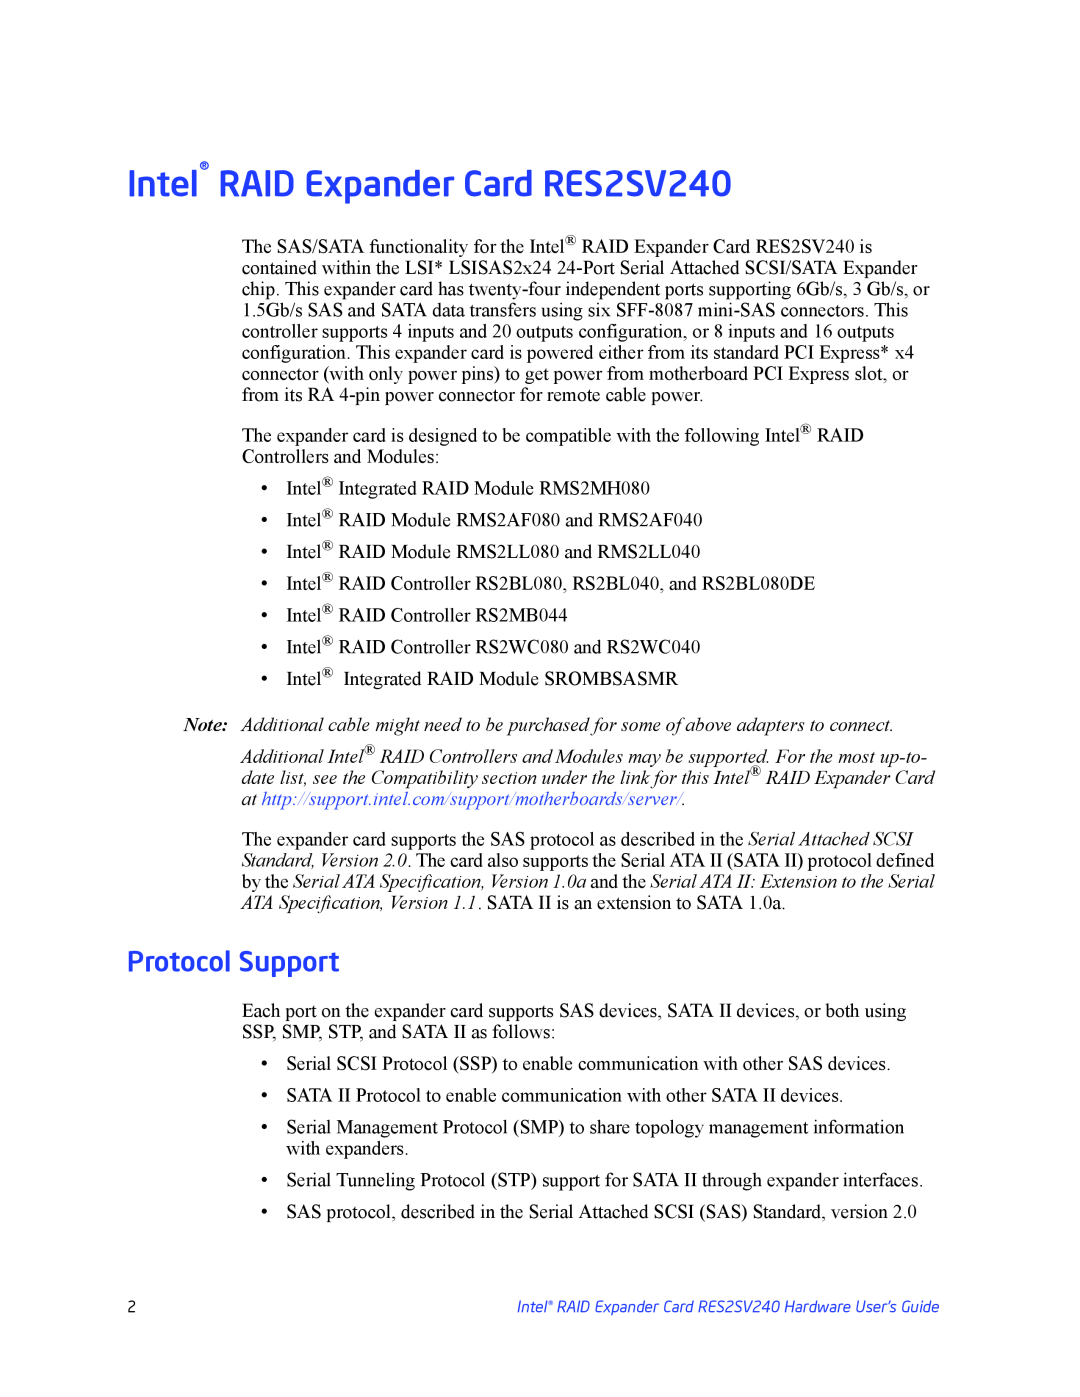 Intel manual Intel RAID Expander Card RES2SV240, Protocol Support 